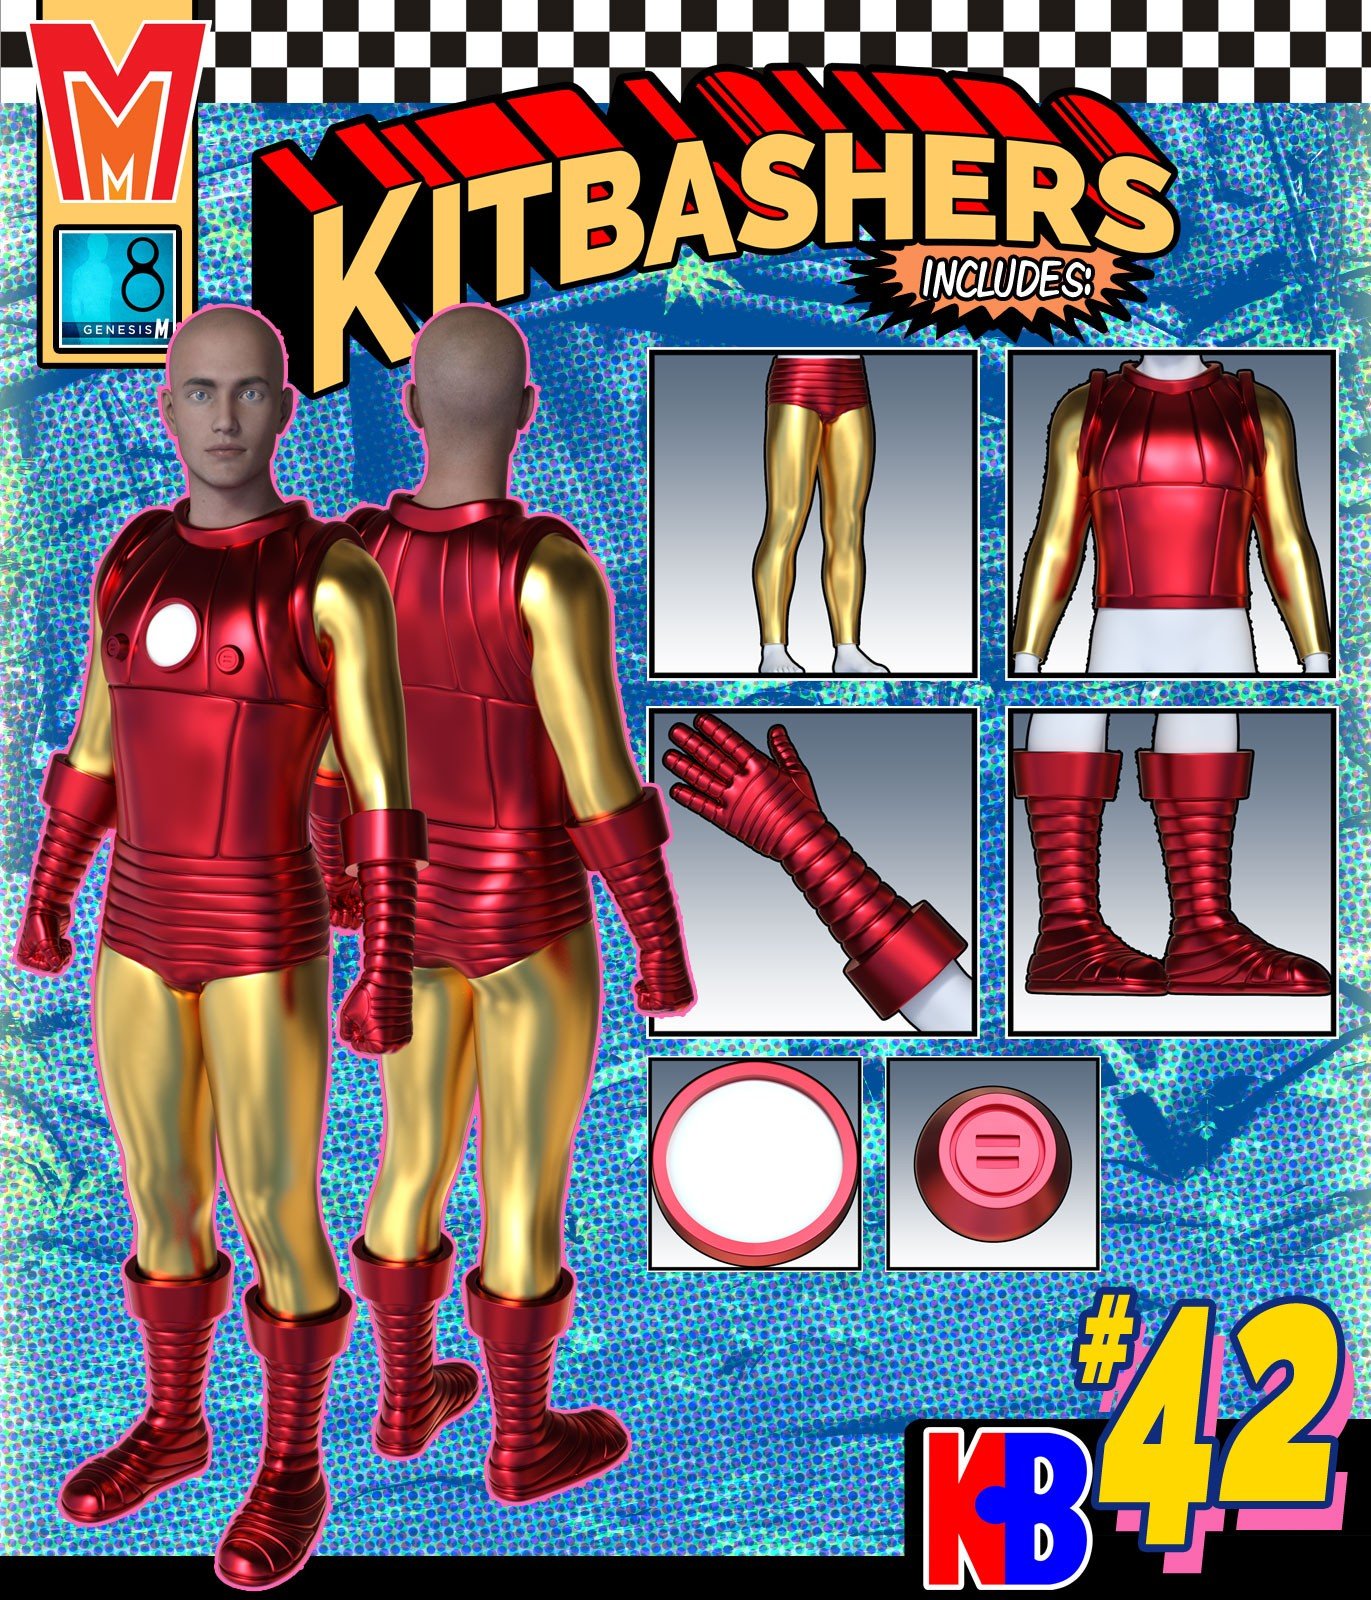 Kitbashers 042 MMG8M by: MightyMite, 3D Models by Daz 3D